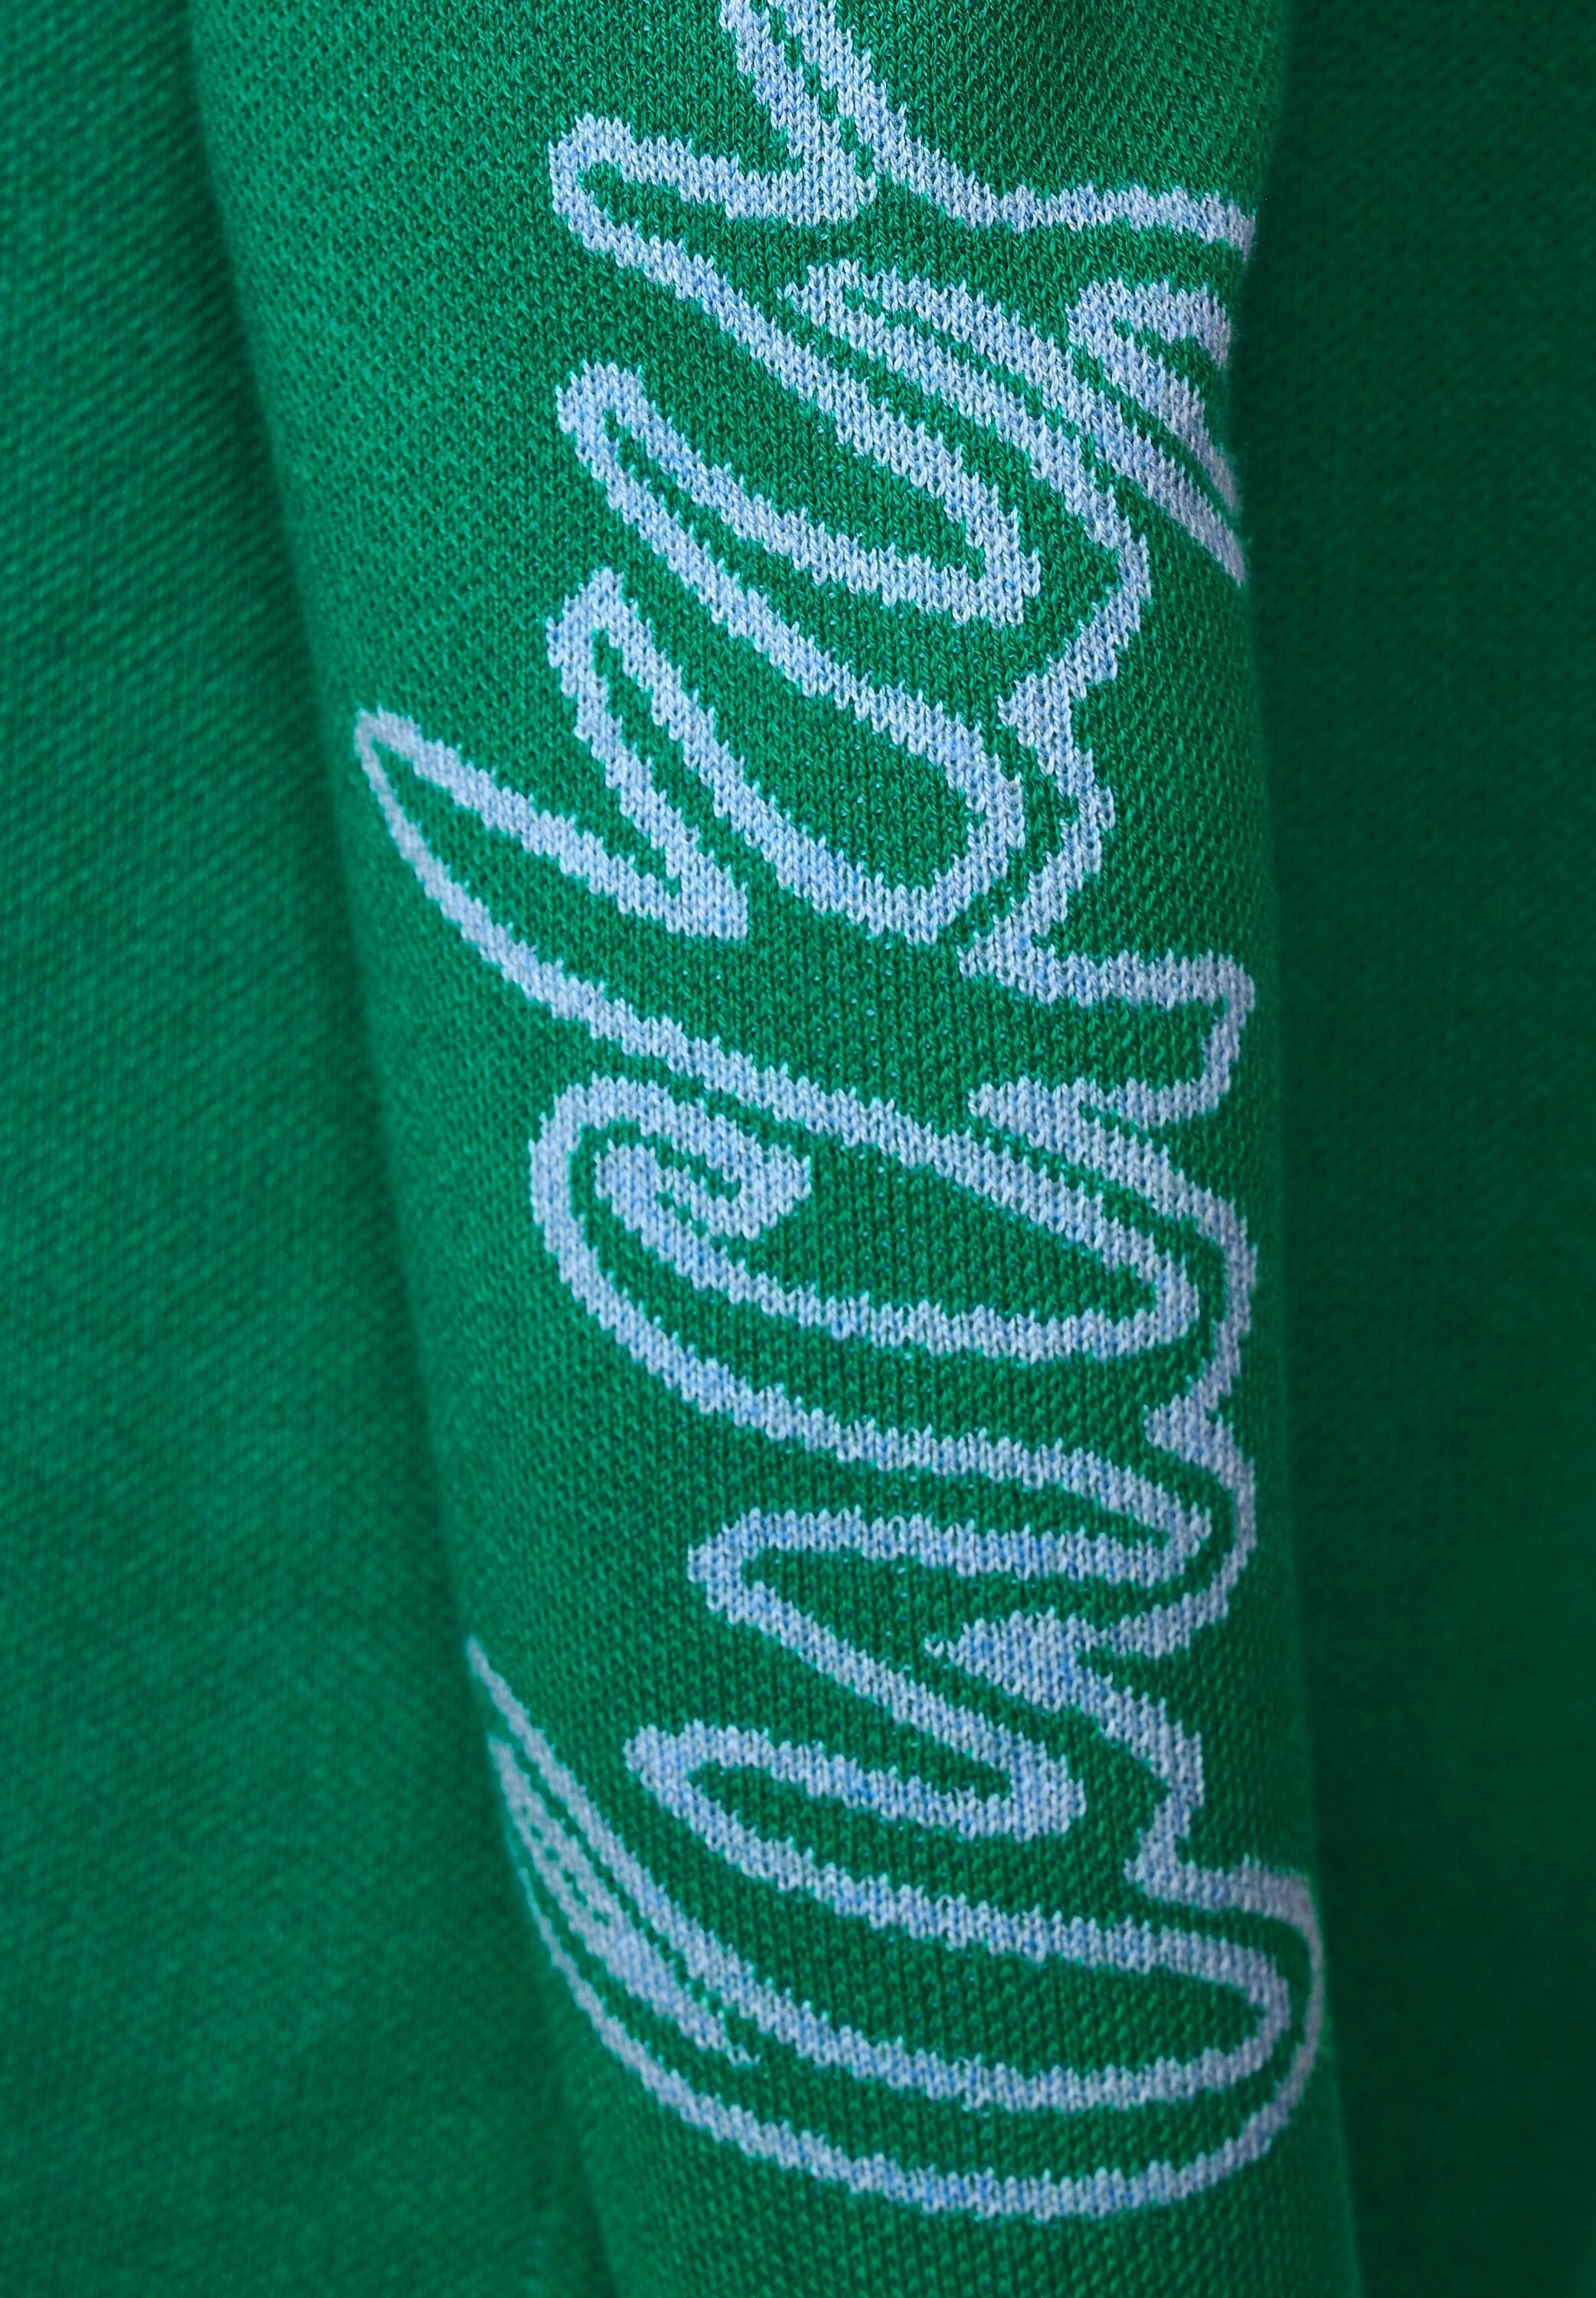 Cecil Sweatshirt easy green